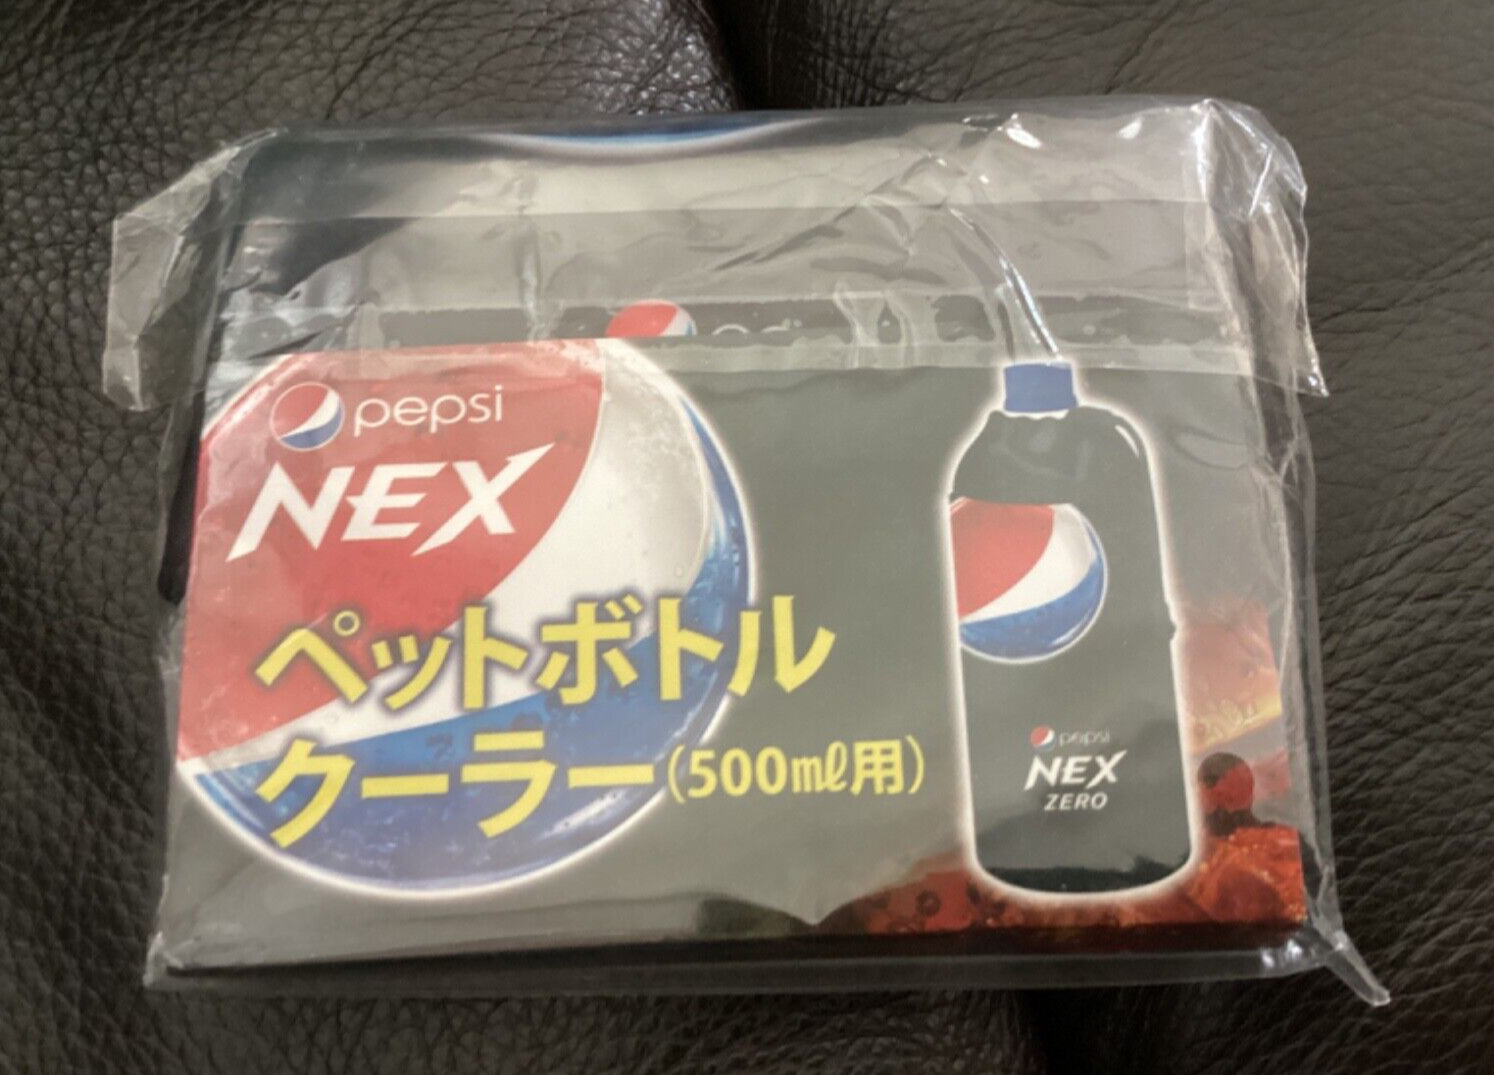 Japan Pepsi Nex Zero Bottle Cooler Found@Okinawa 